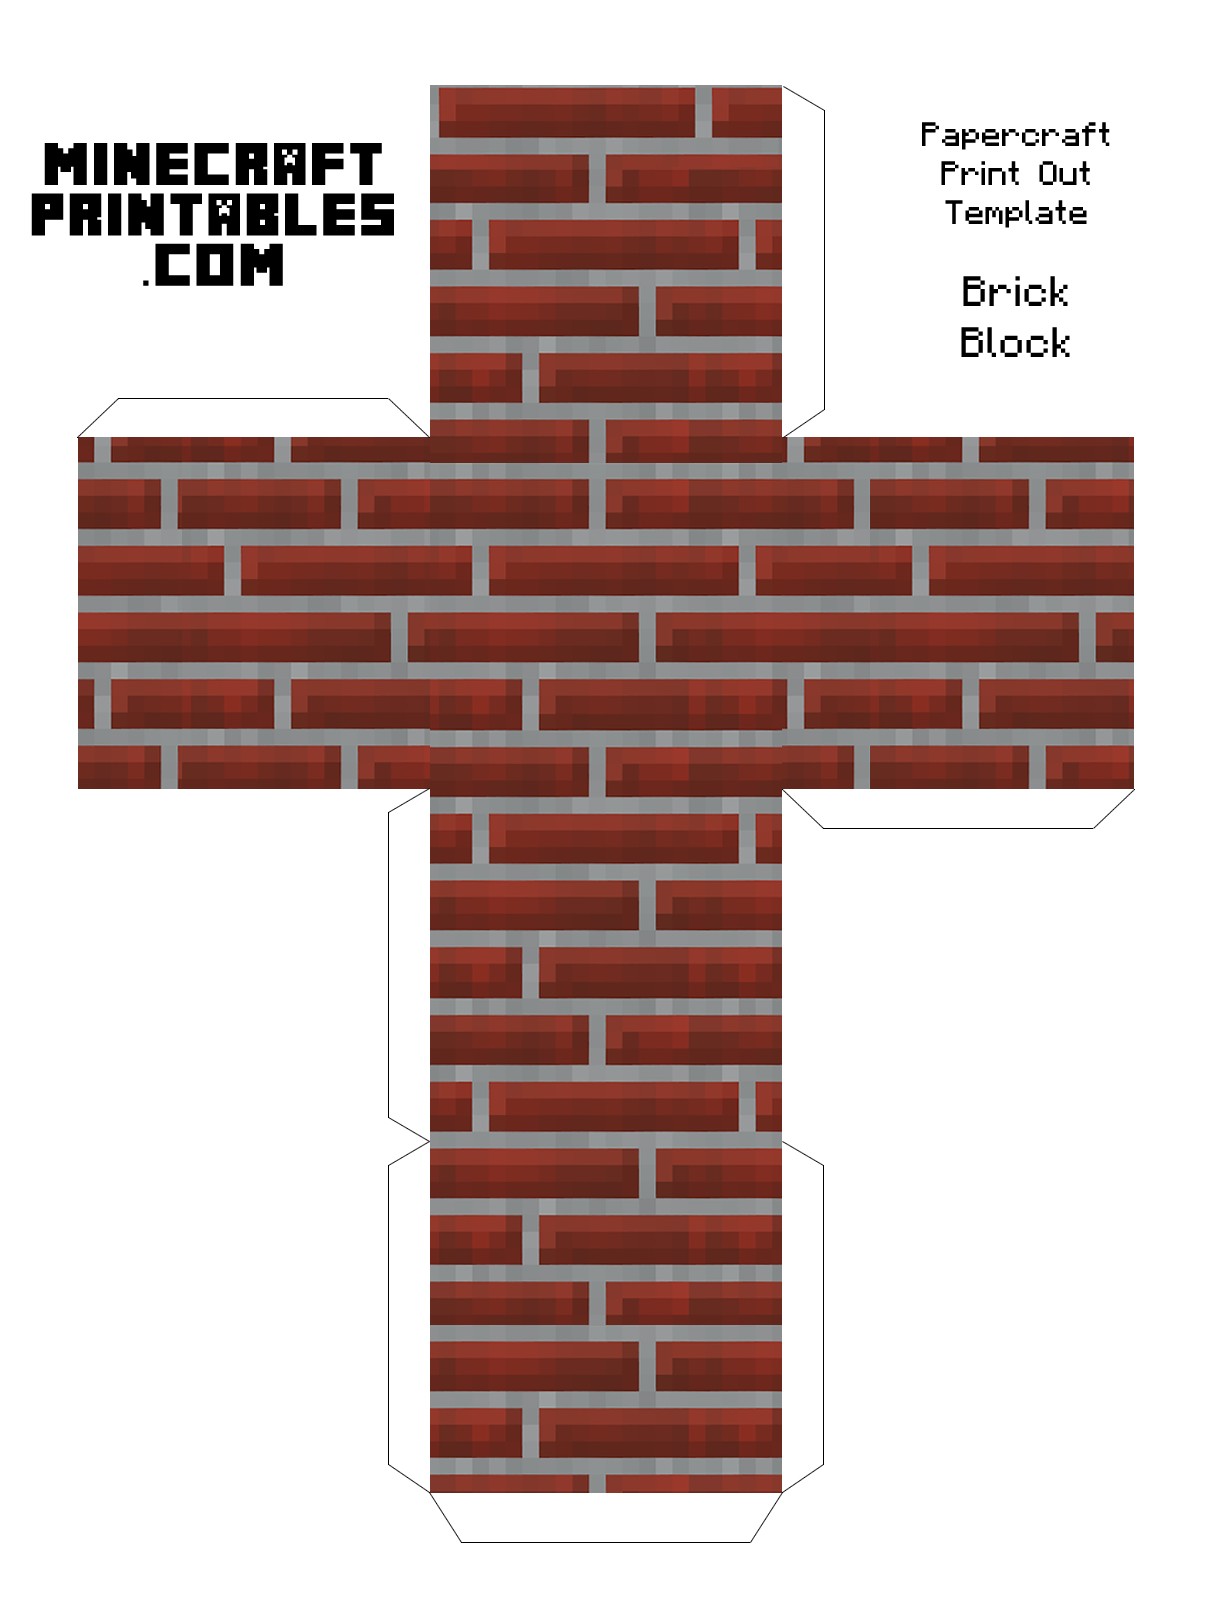 Minecraft Pig Papercraft Brick Block Minecraft Party Pinterest